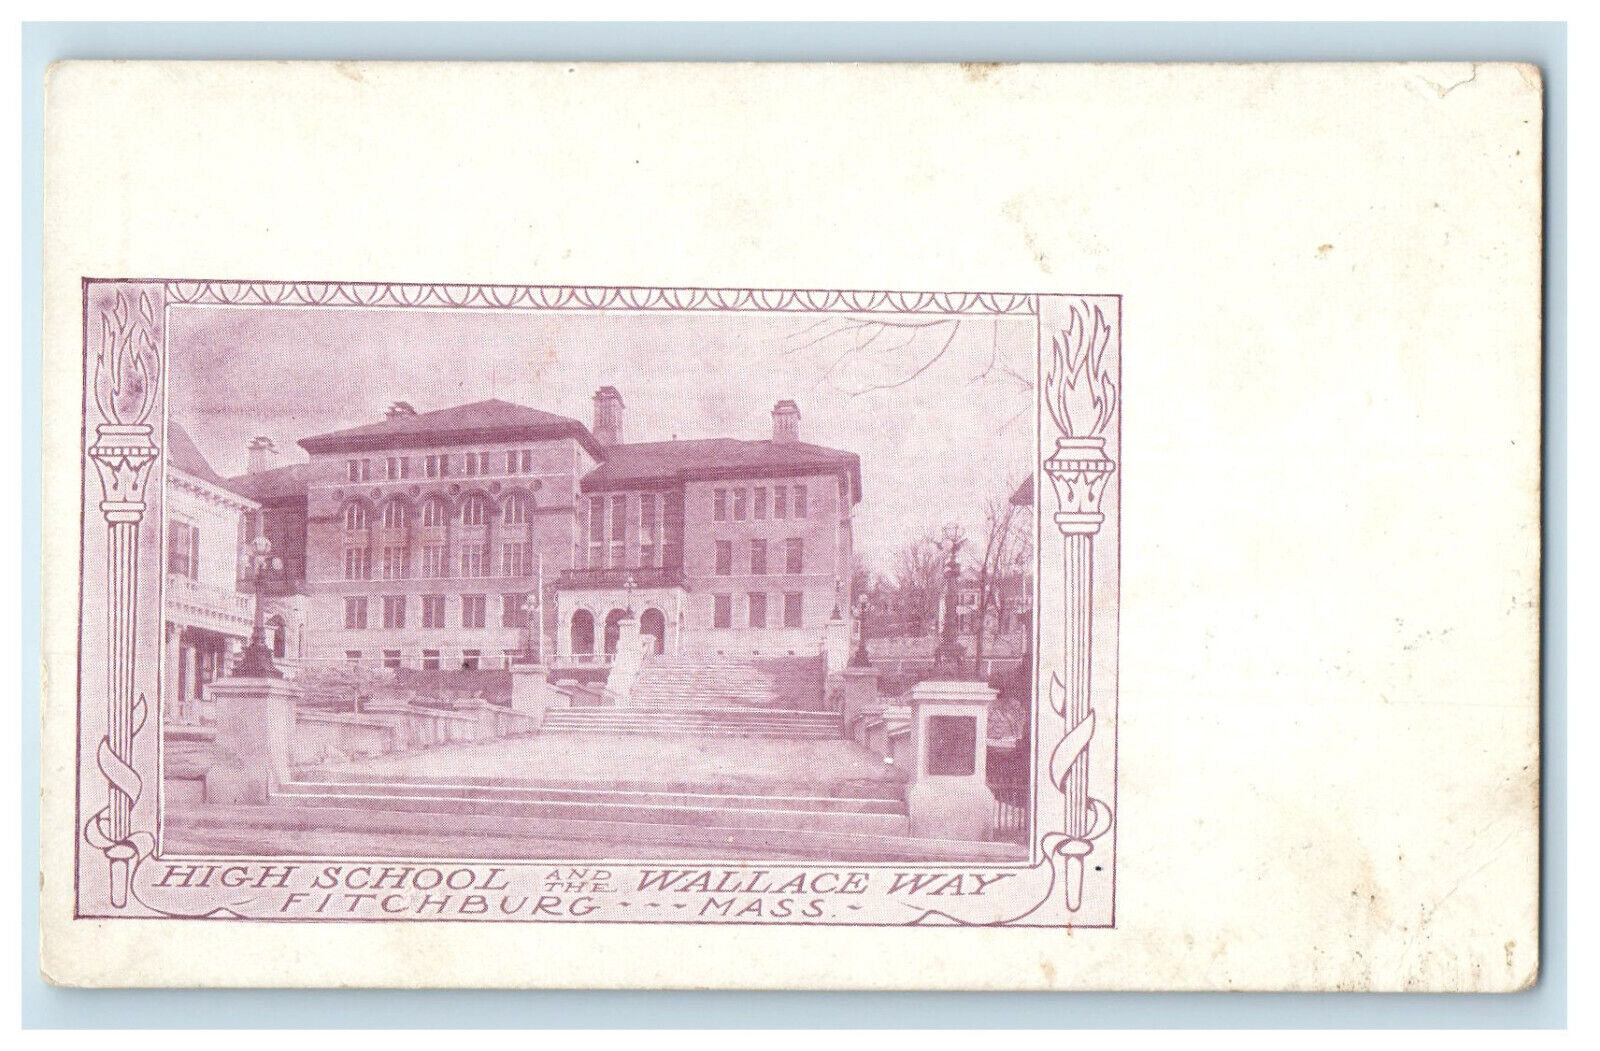 c1900s High School, Wallace Way Fitchburg Massachusetts MA PMC Postcard